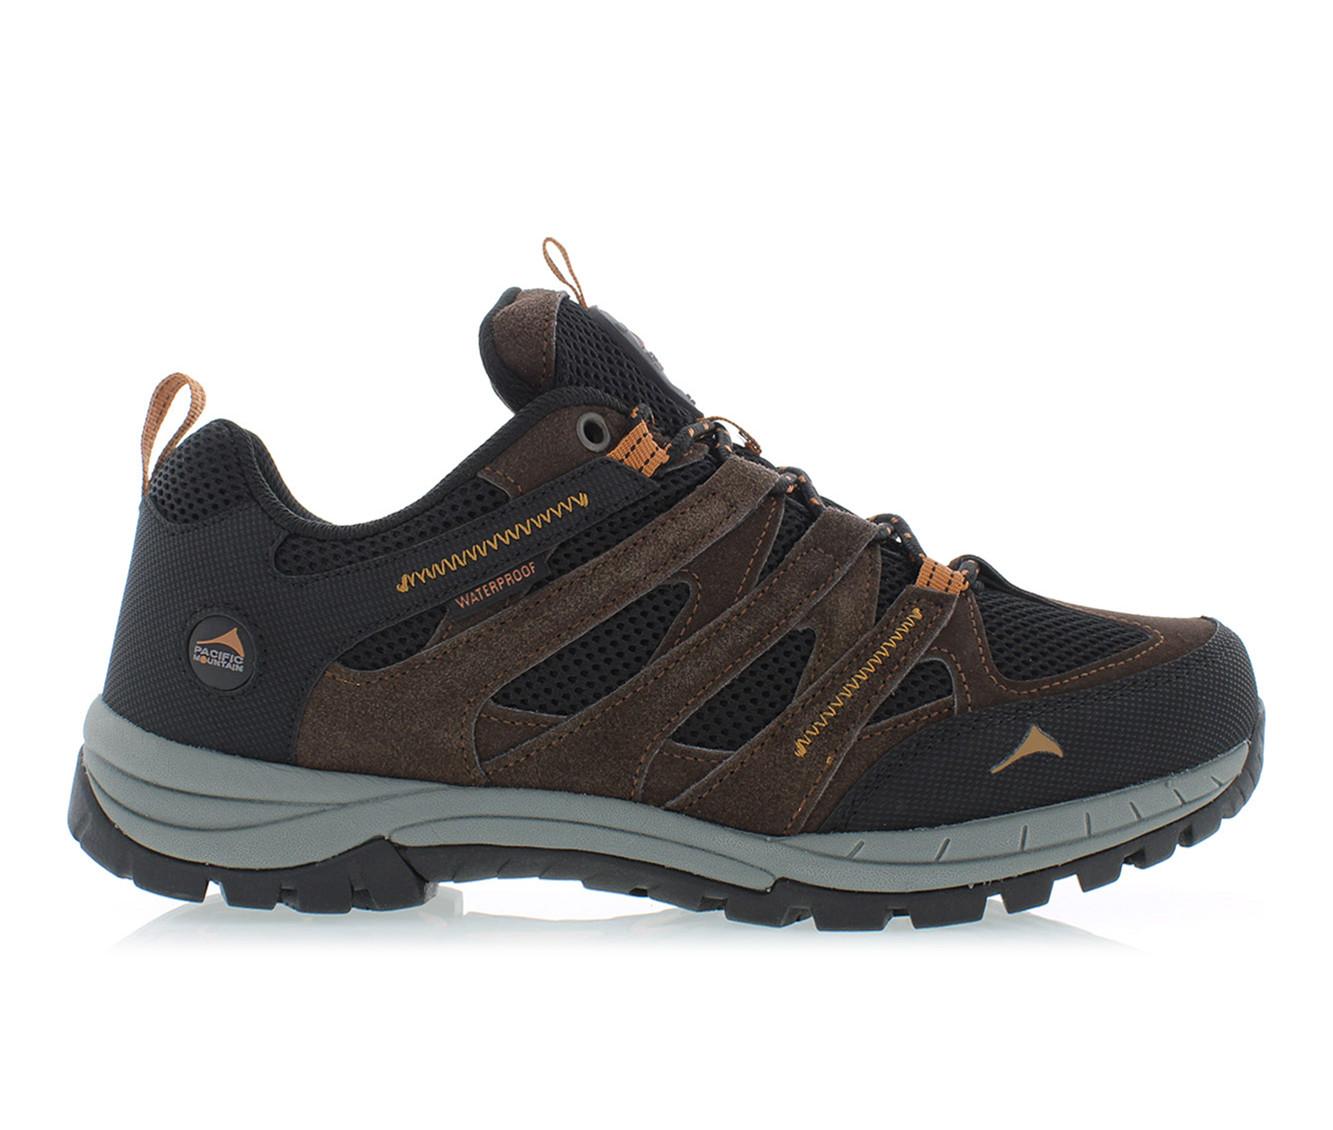 Men's Pacific Mountain Colorado Low Waterproof Hiking Sneakers